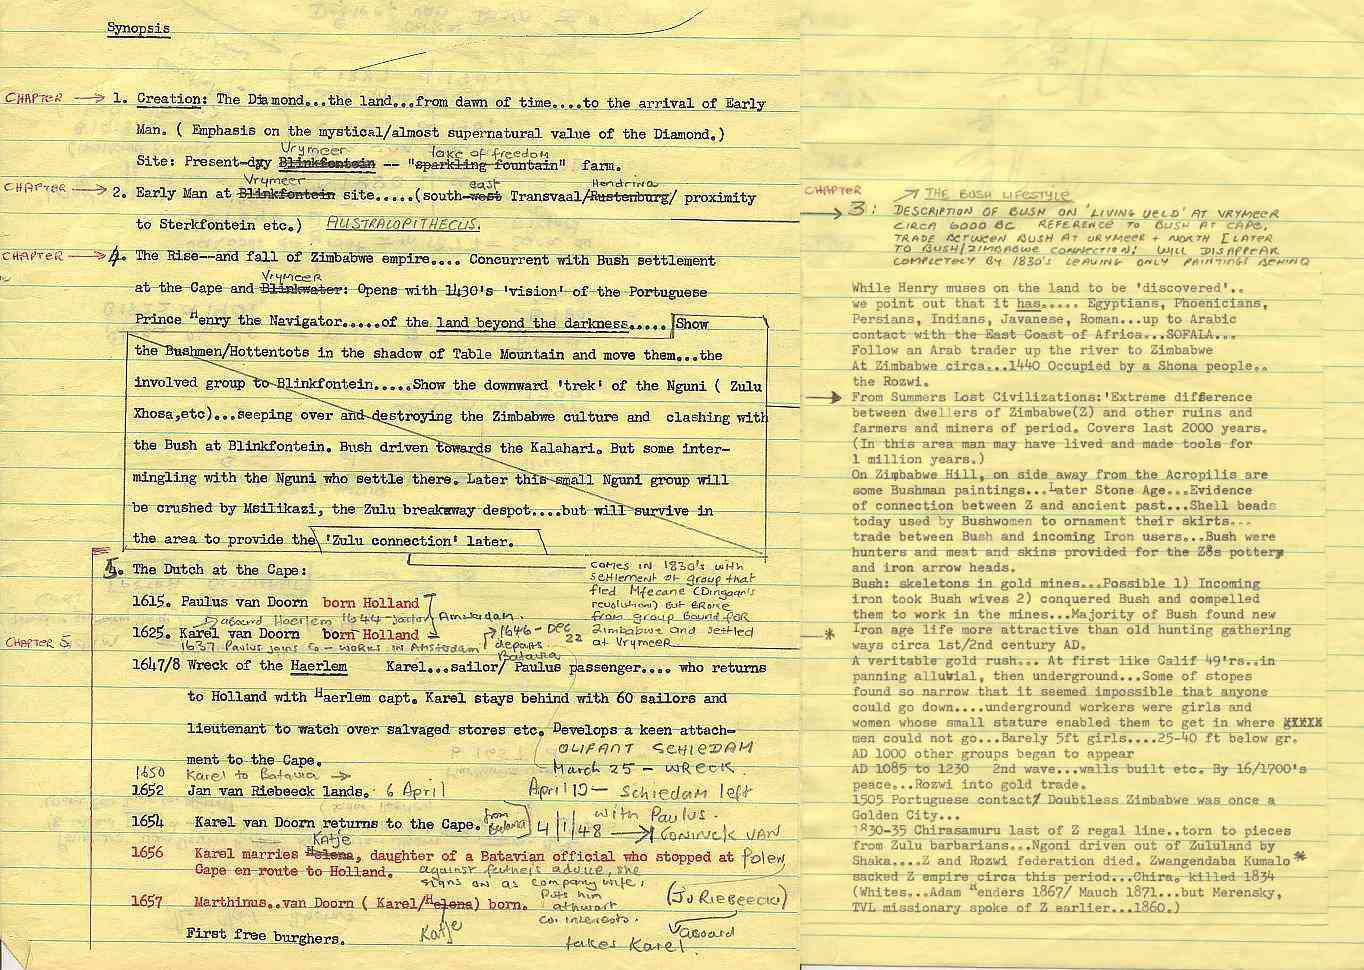 Errol Lincoln Uys - Original draft plot for James Michener's novel, The Covenant